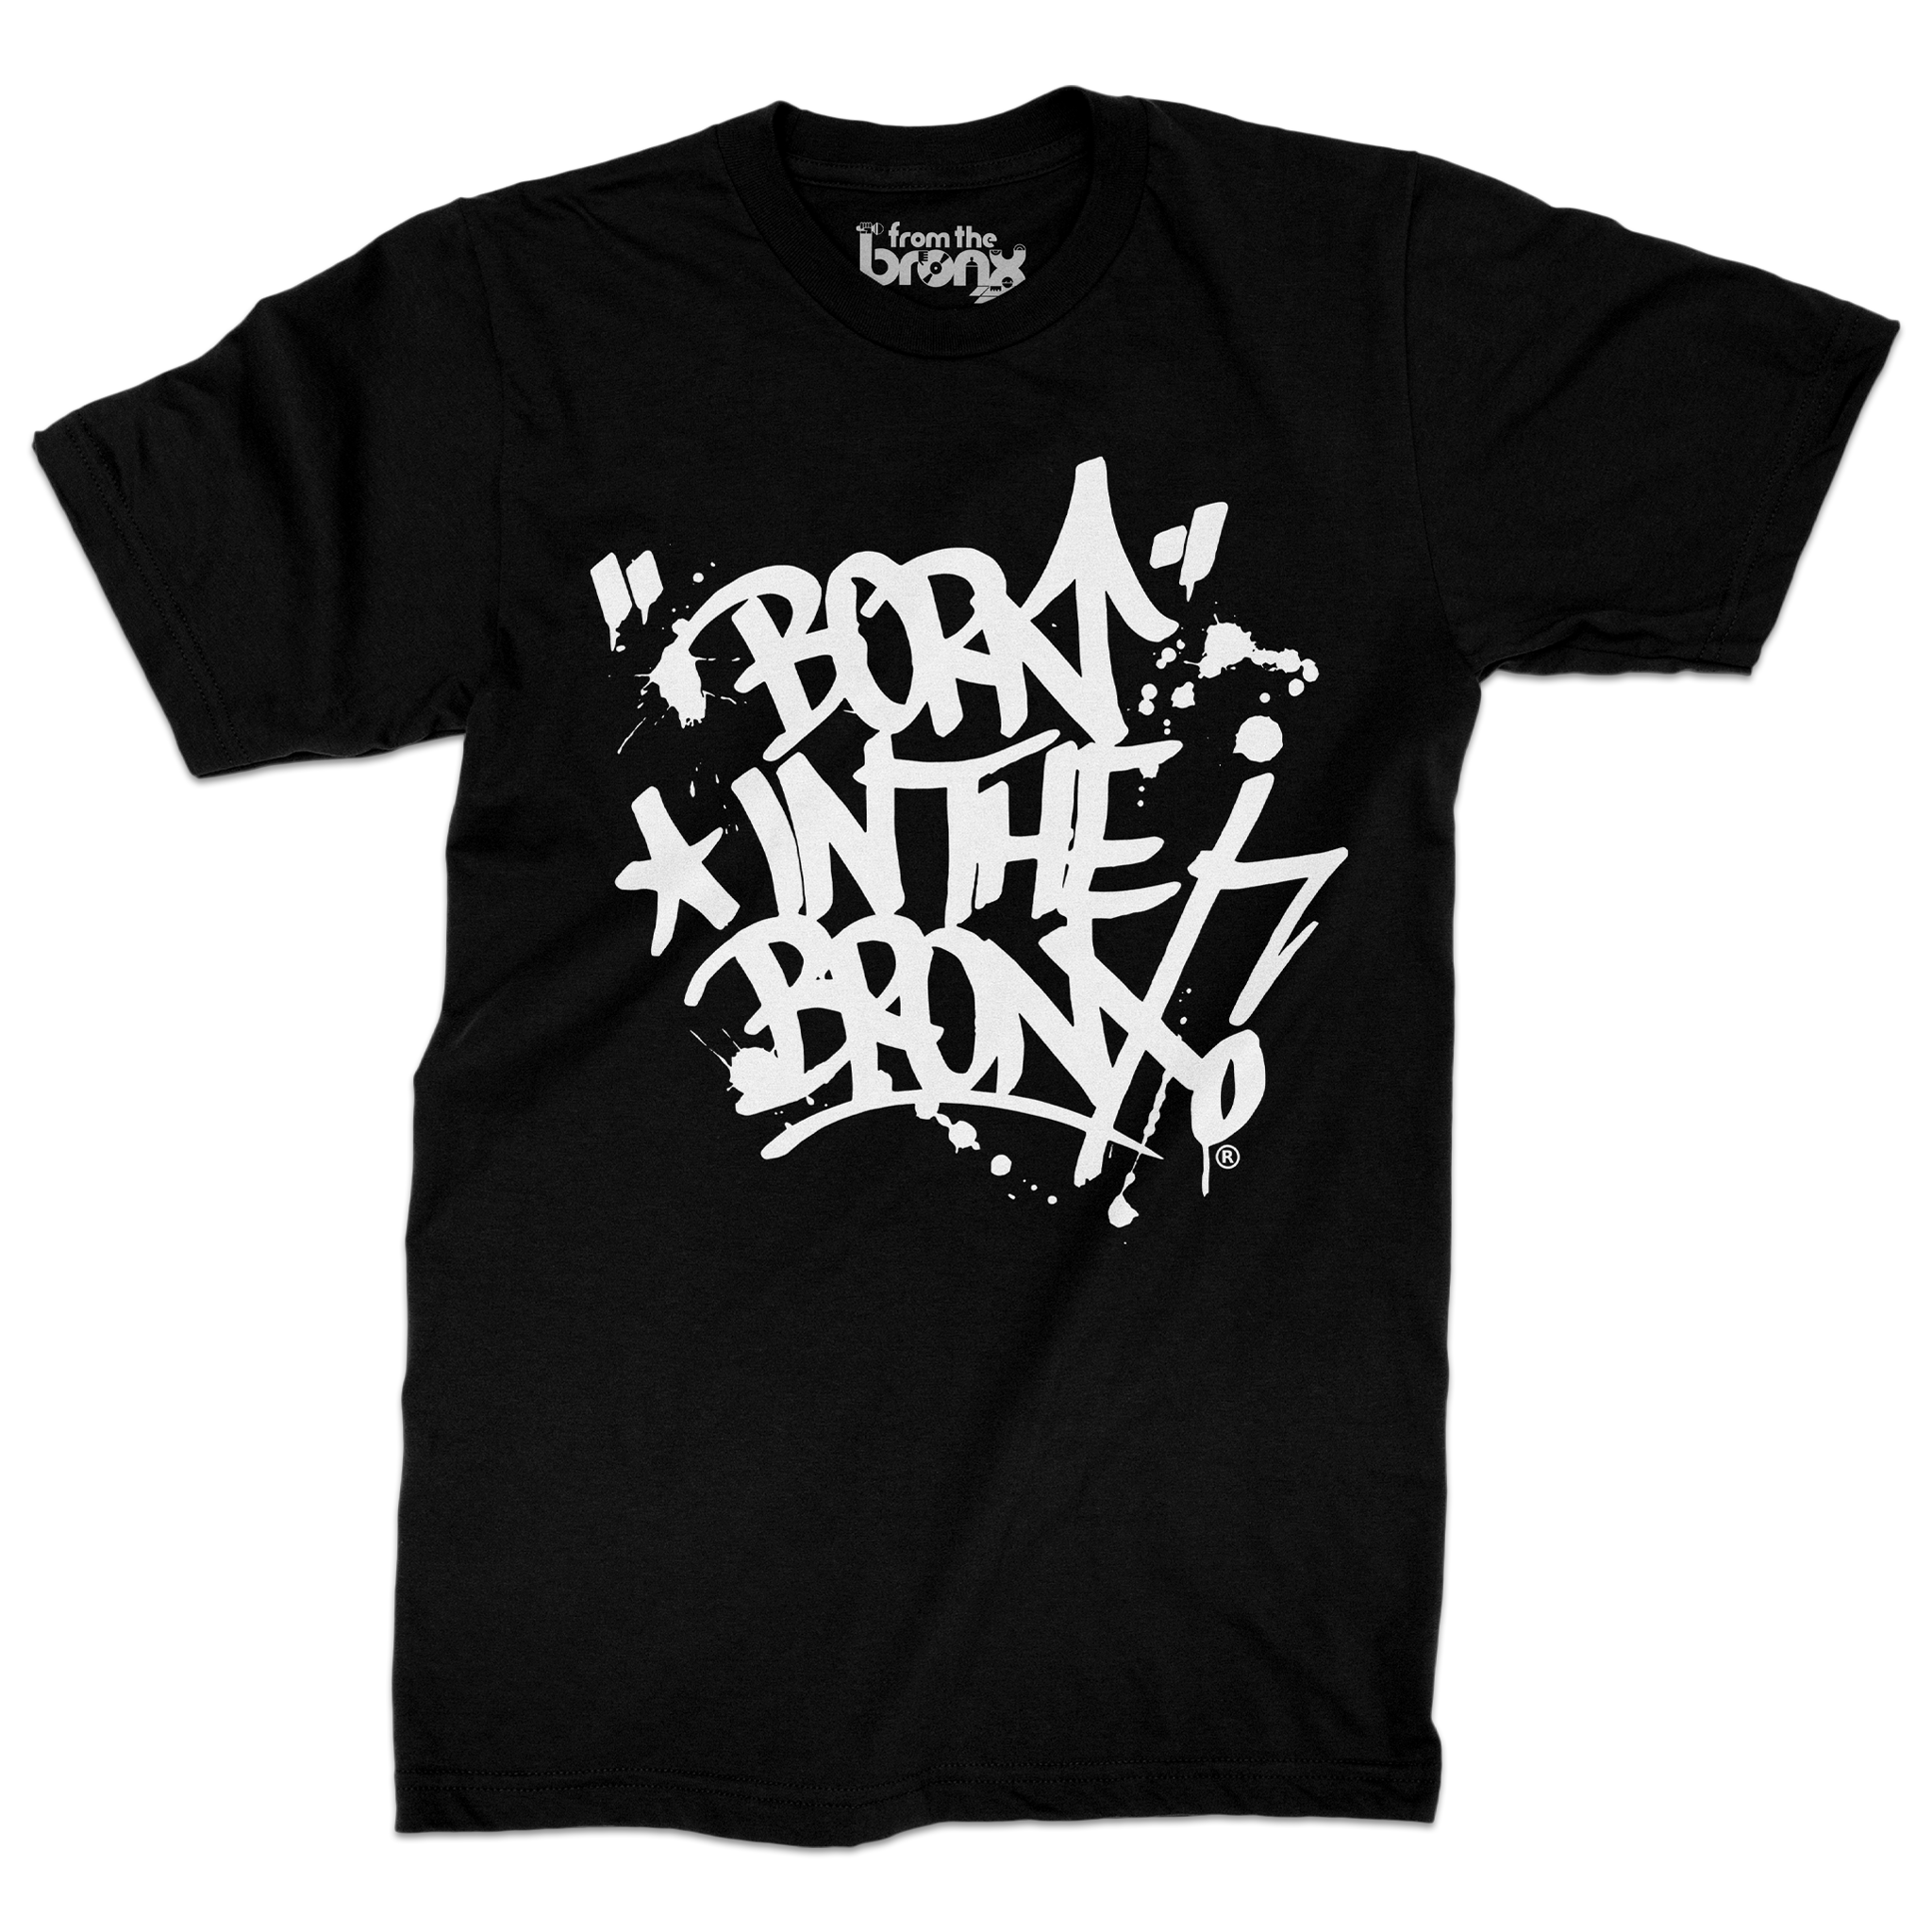 "Born" in The Bronx! Paint Splatter T-Shirt Front in White on Black